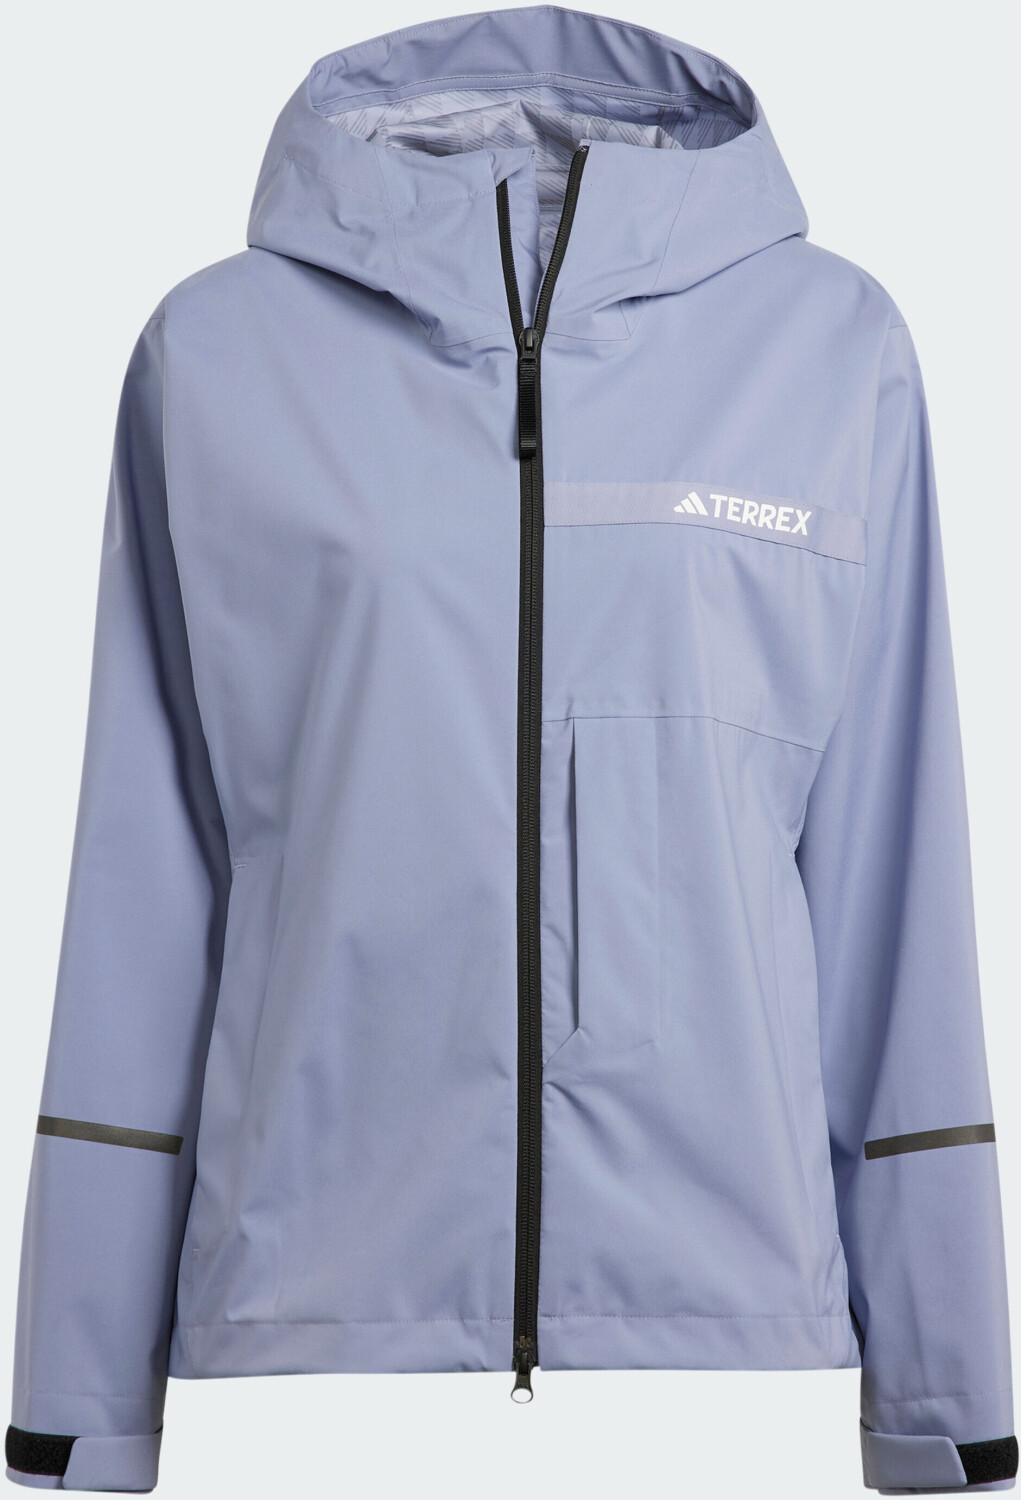 Adidas Woman Jacket Multi TERREX bei (IP3833) violet Rain silver RAIN.RDY | € 2.5-Layer 102,49 ab Preisvergleich